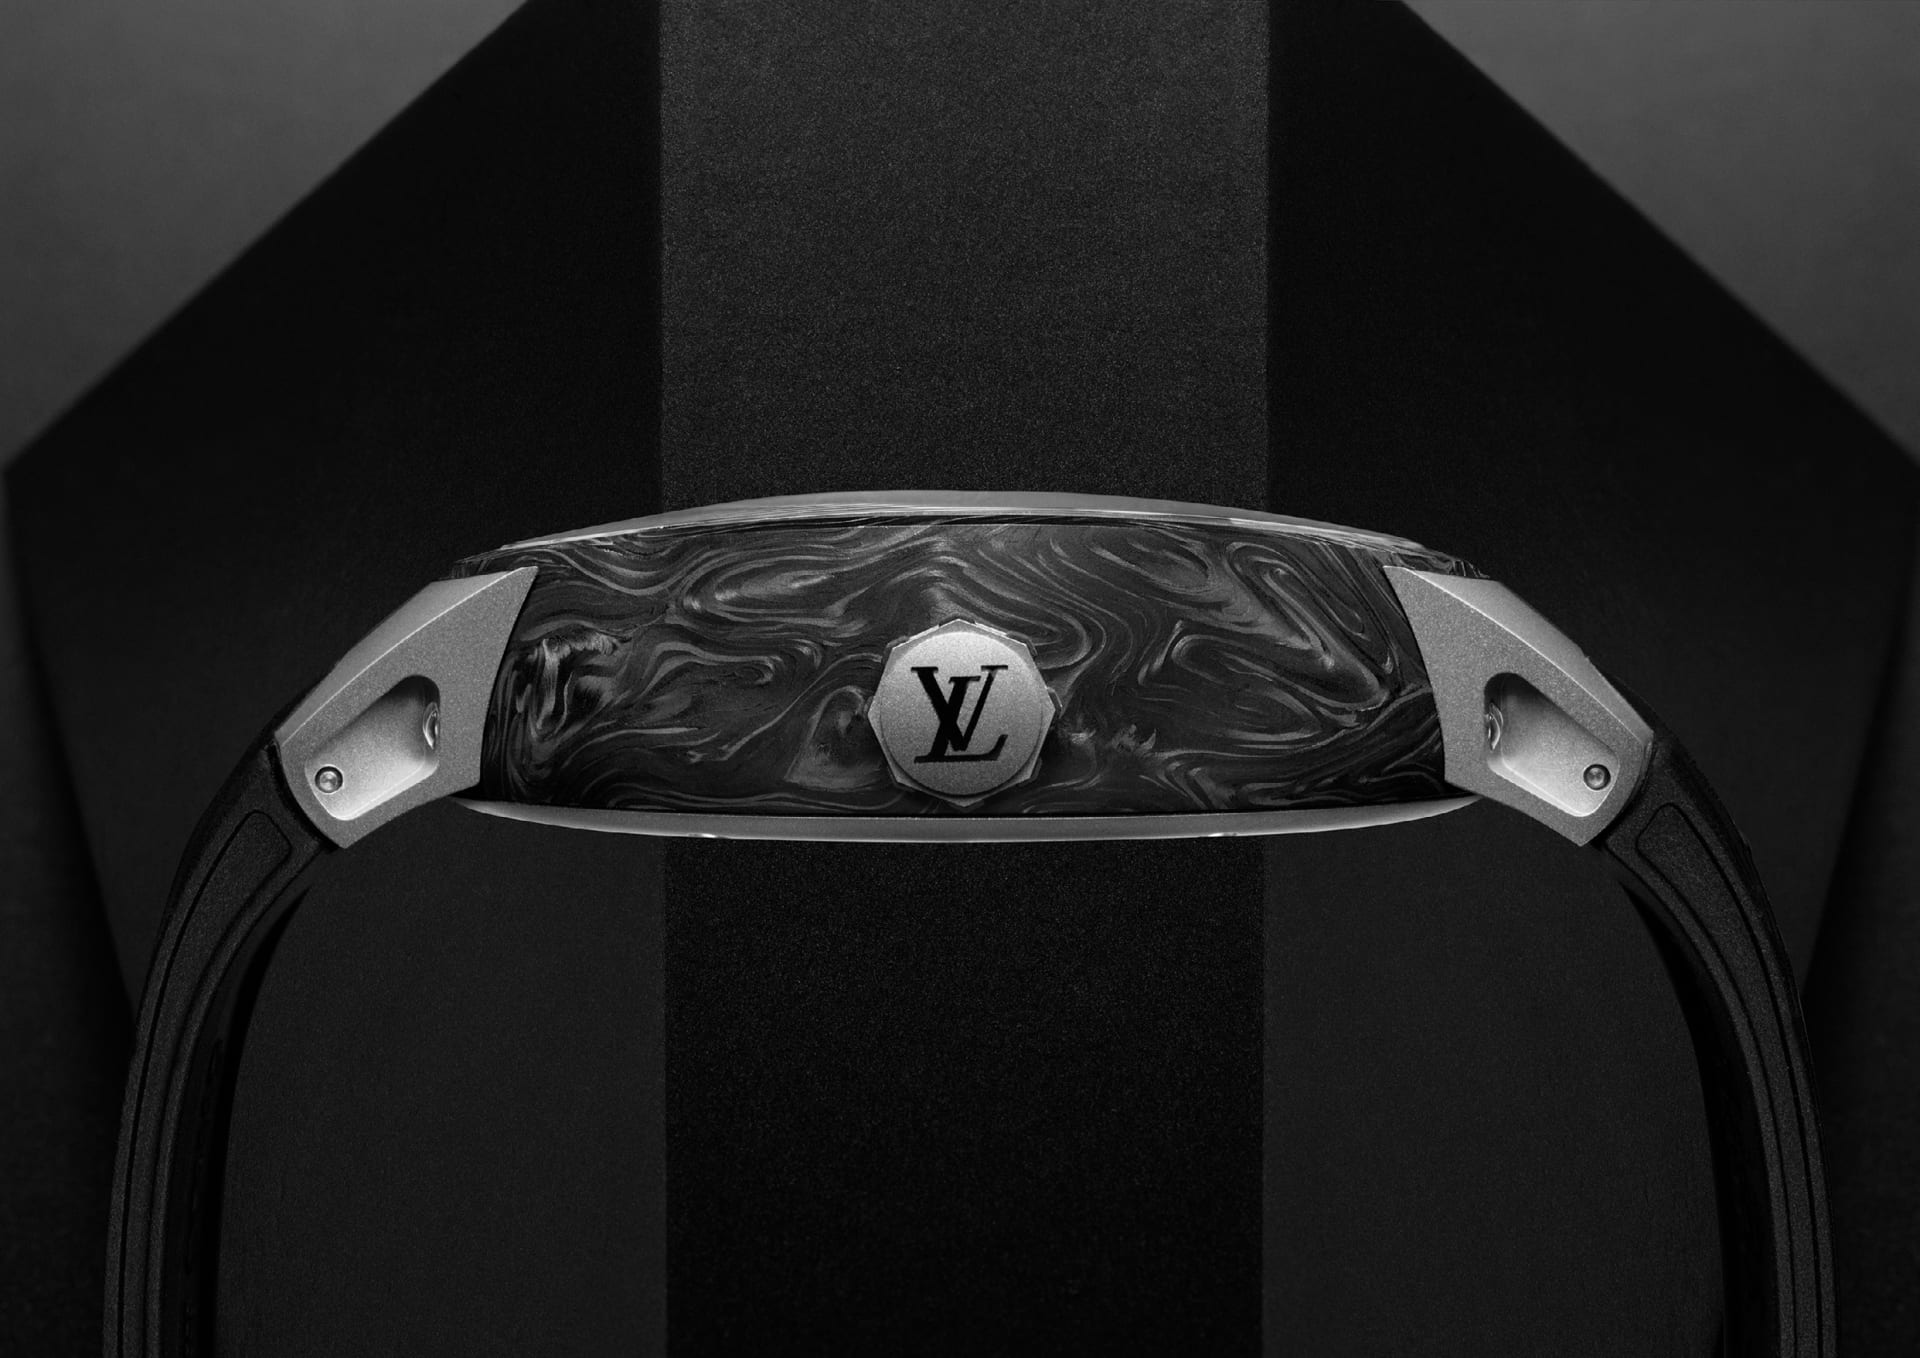 Hands-On with the Louis Vuitton Flying Tourbillon Poinçon de